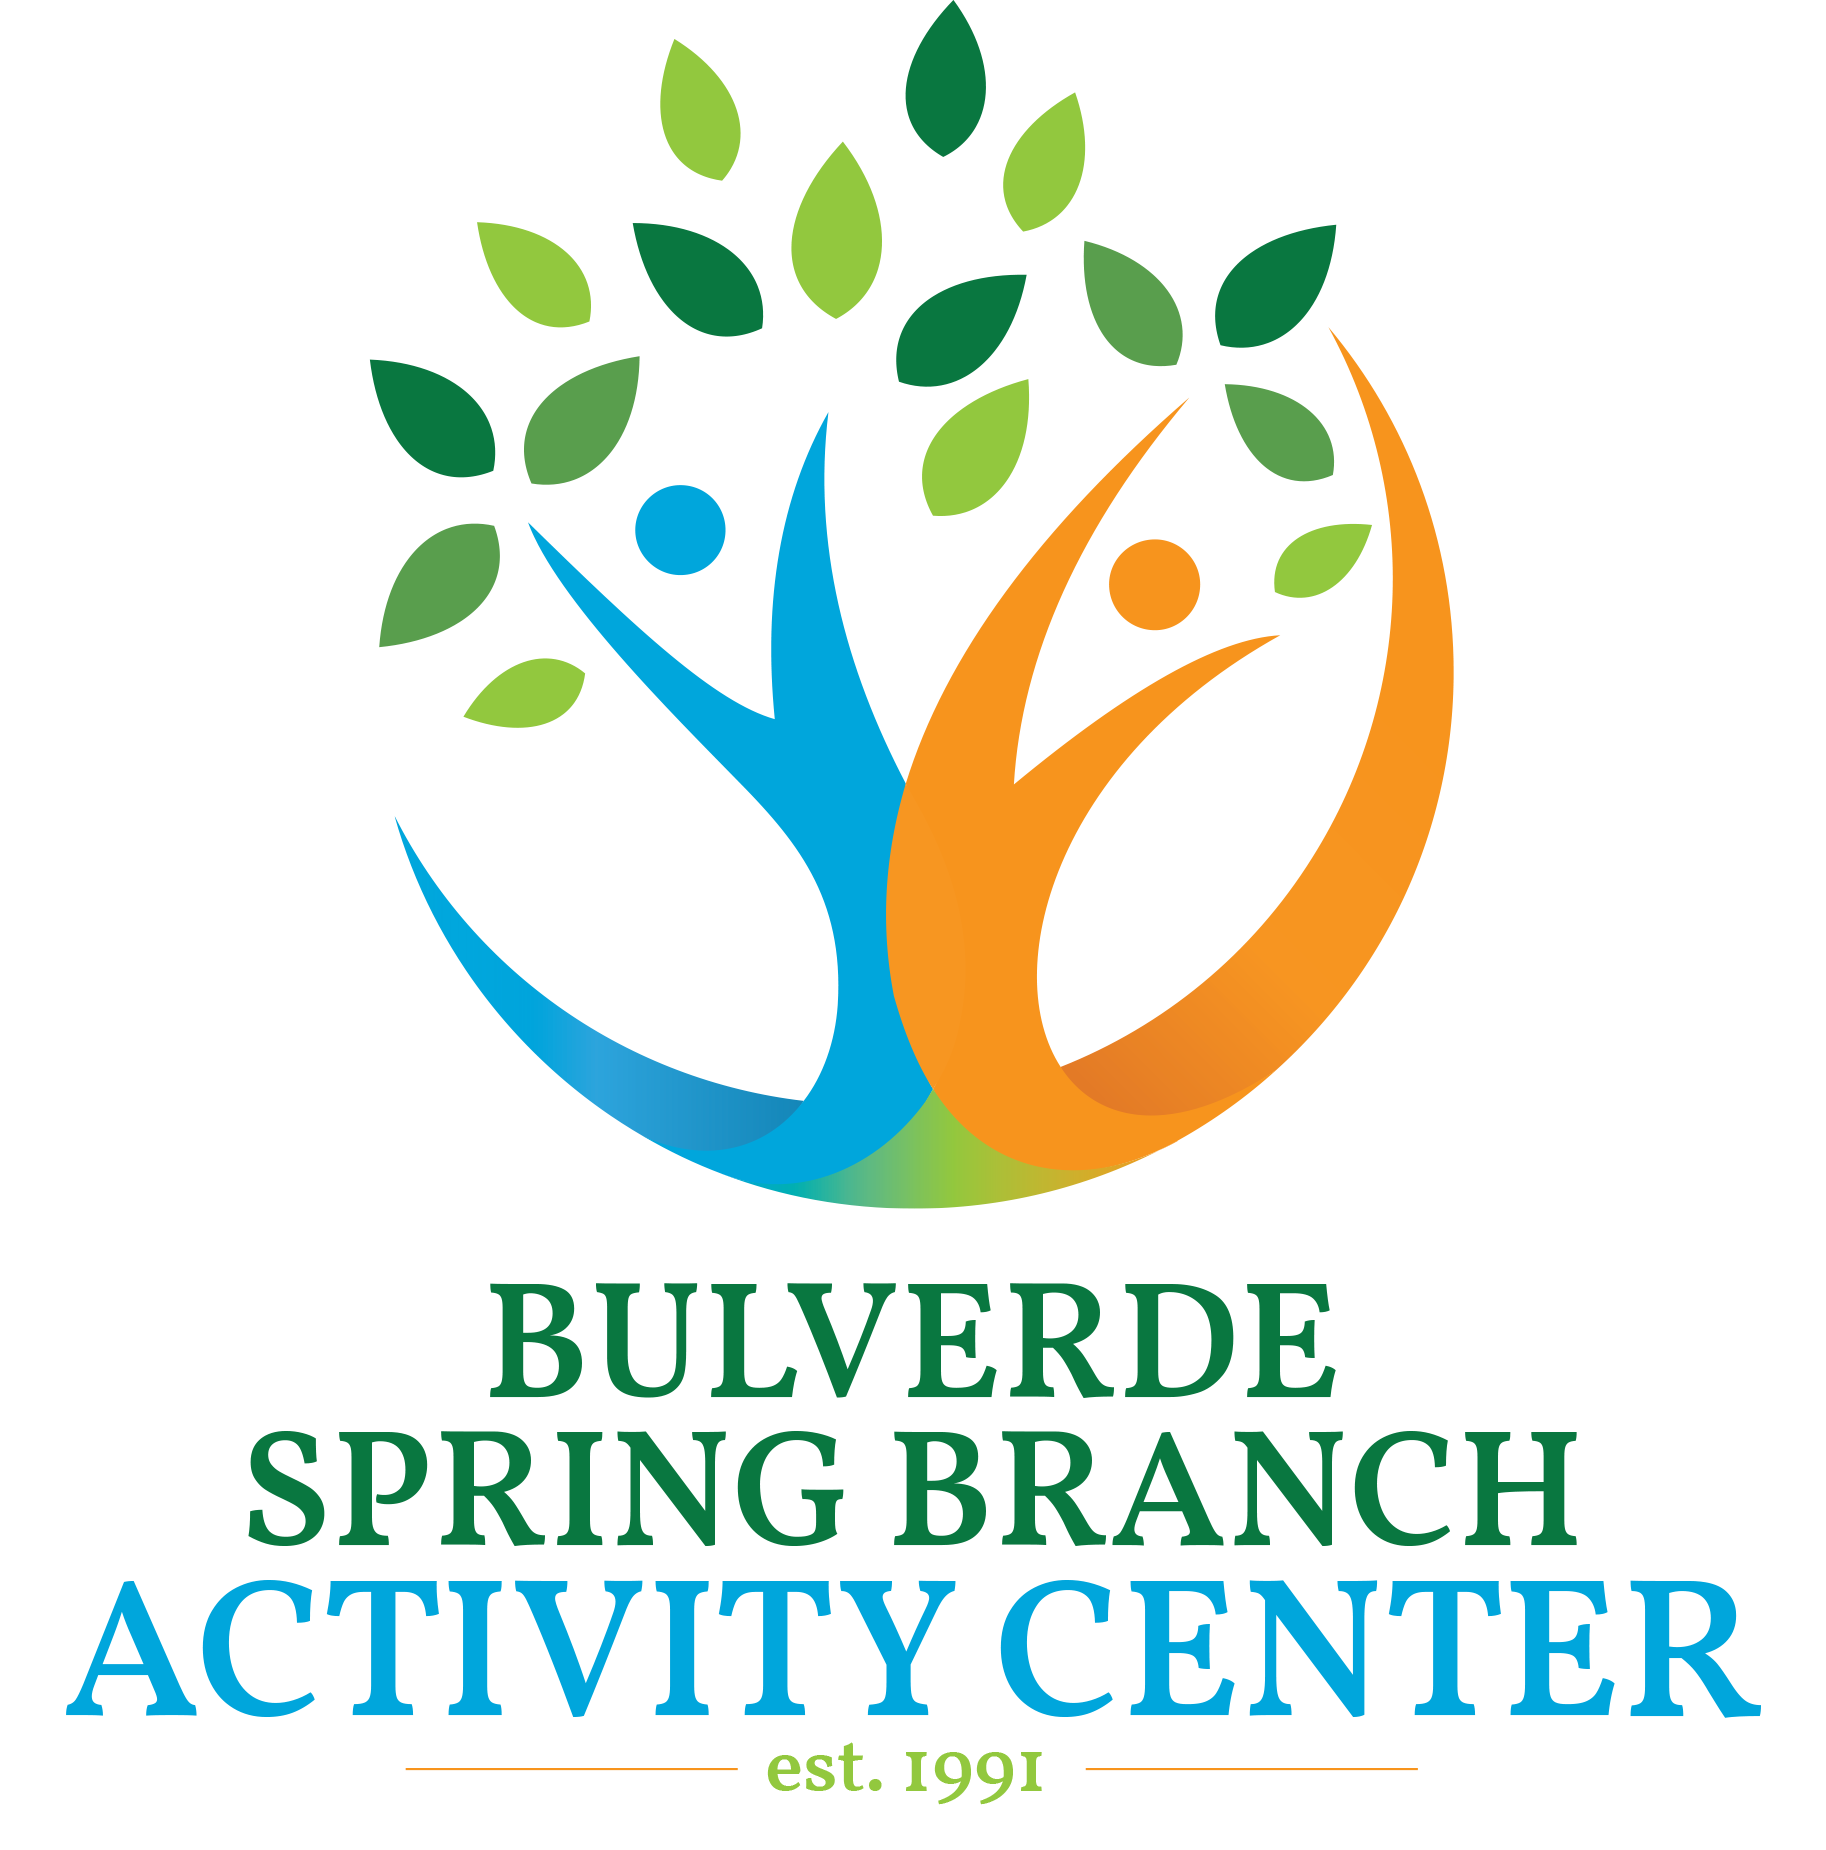 Bulverde Spring Branch Activity Center